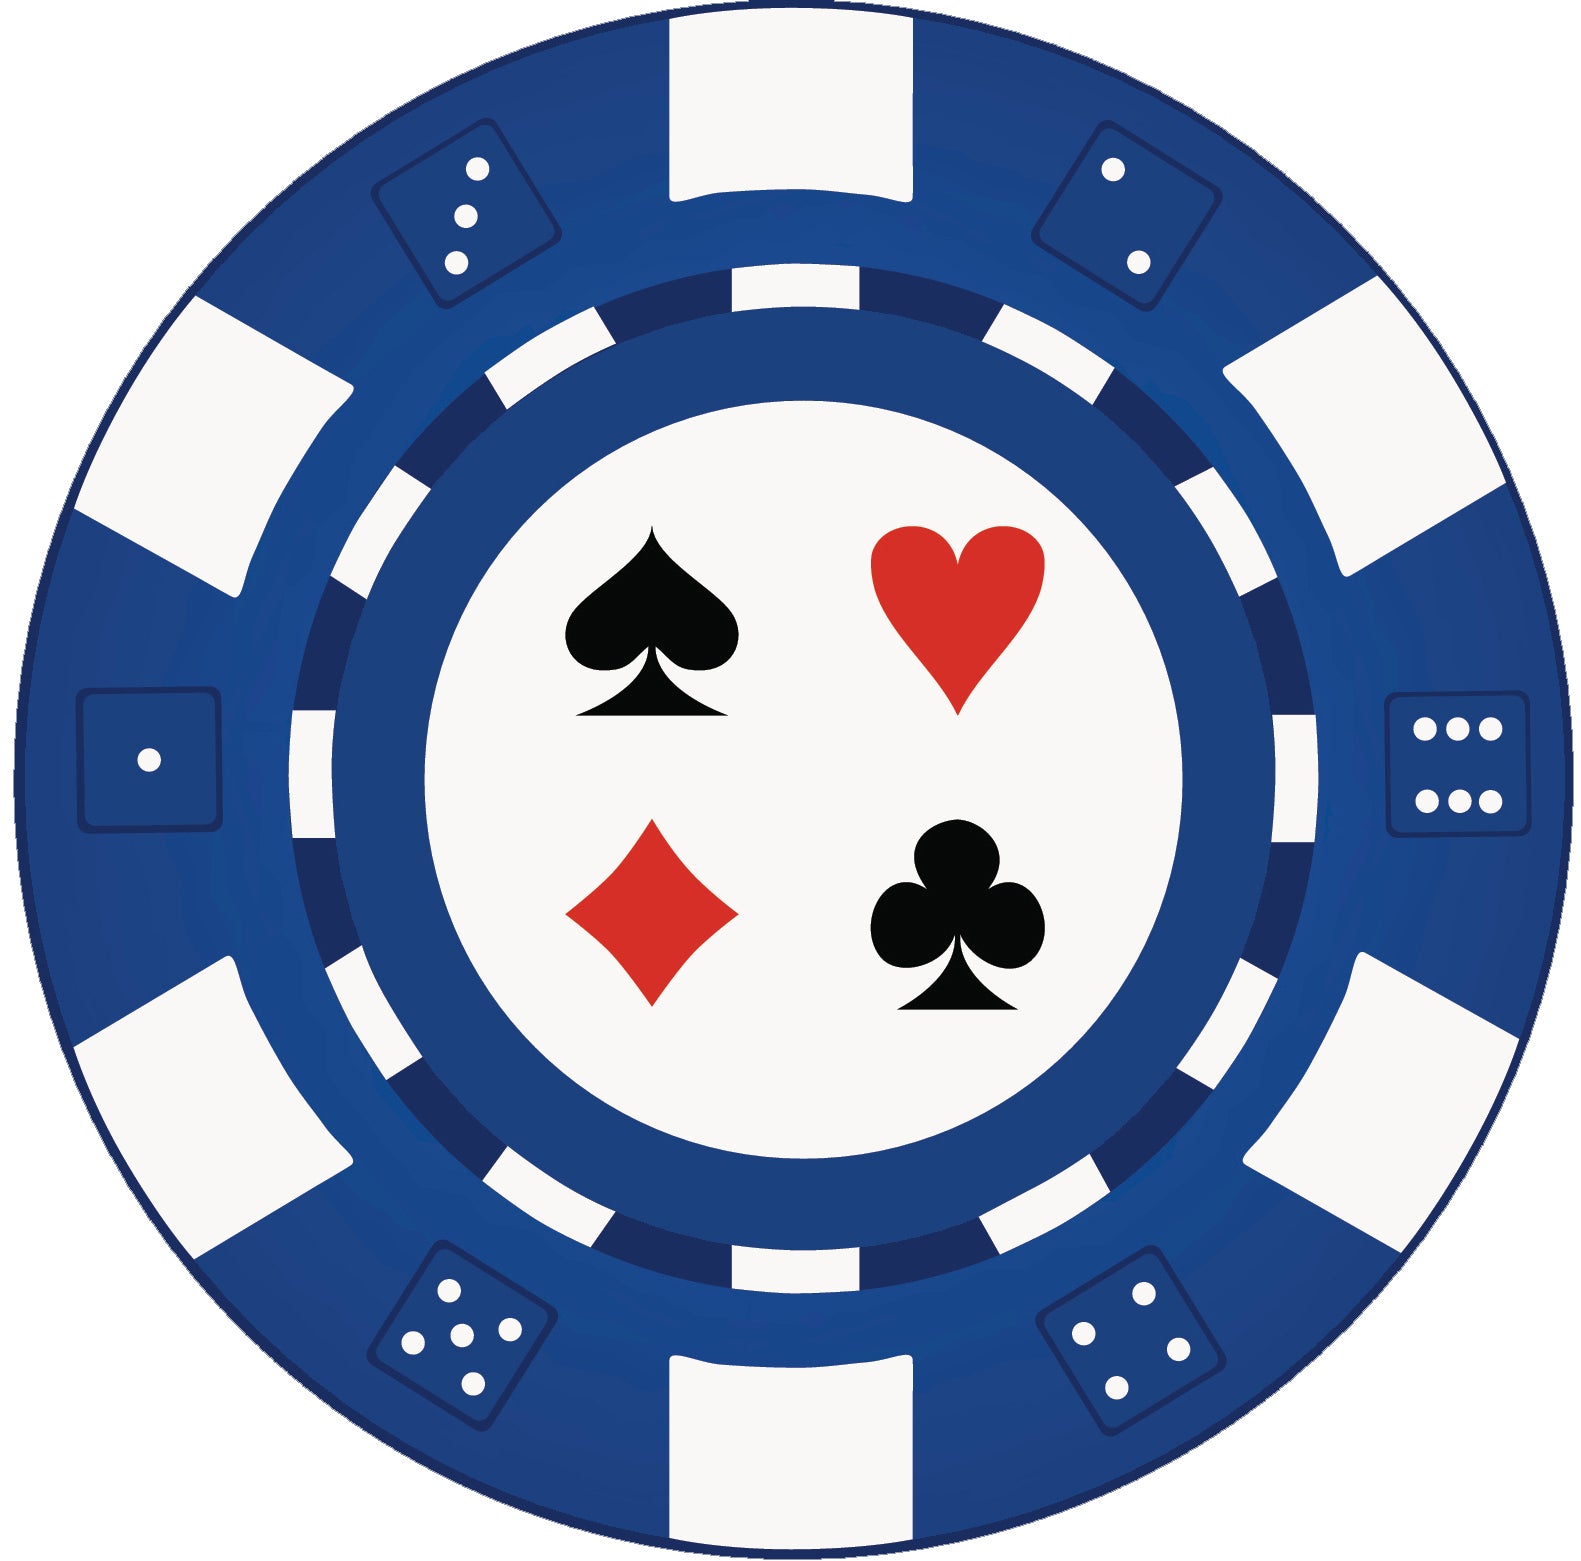 Poker Casino Chip - Blue Vinyl Decal Sticker